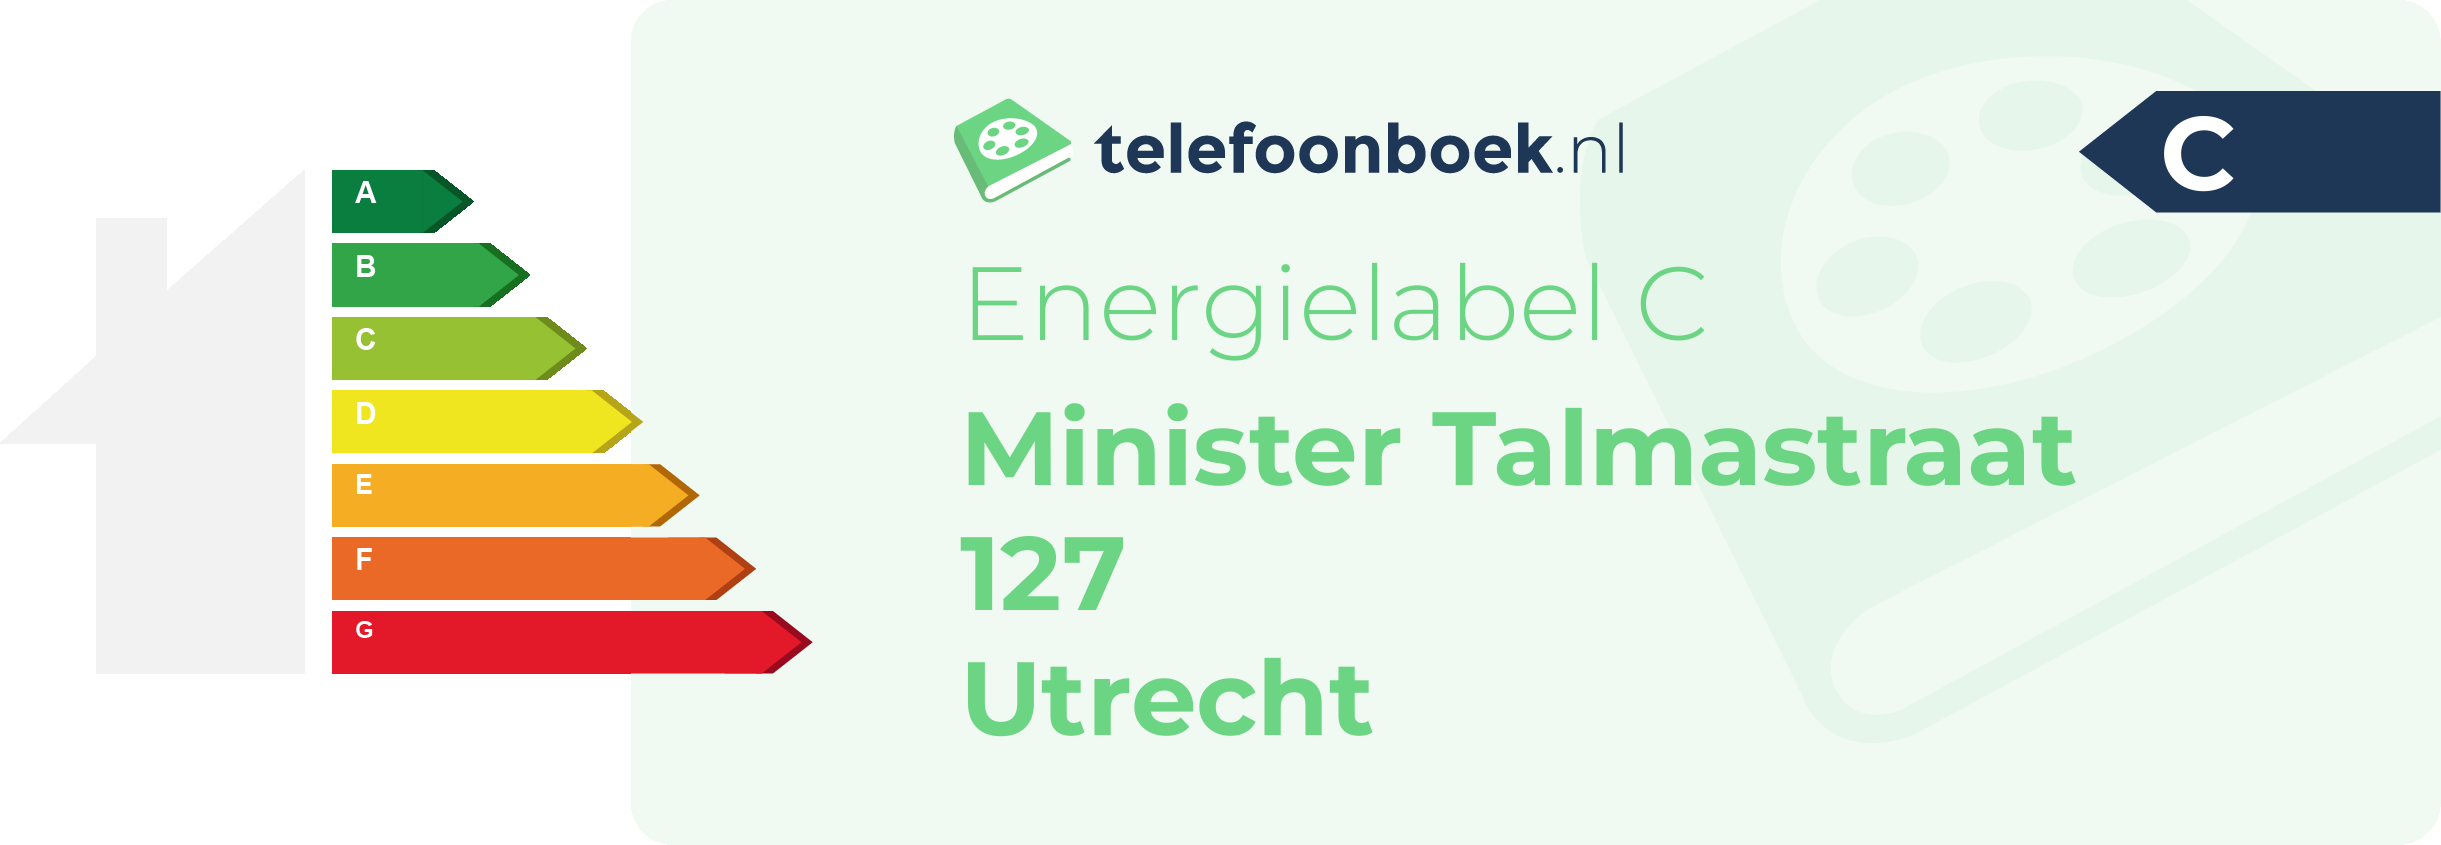 Energielabel Minister Talmastraat 127 Utrecht